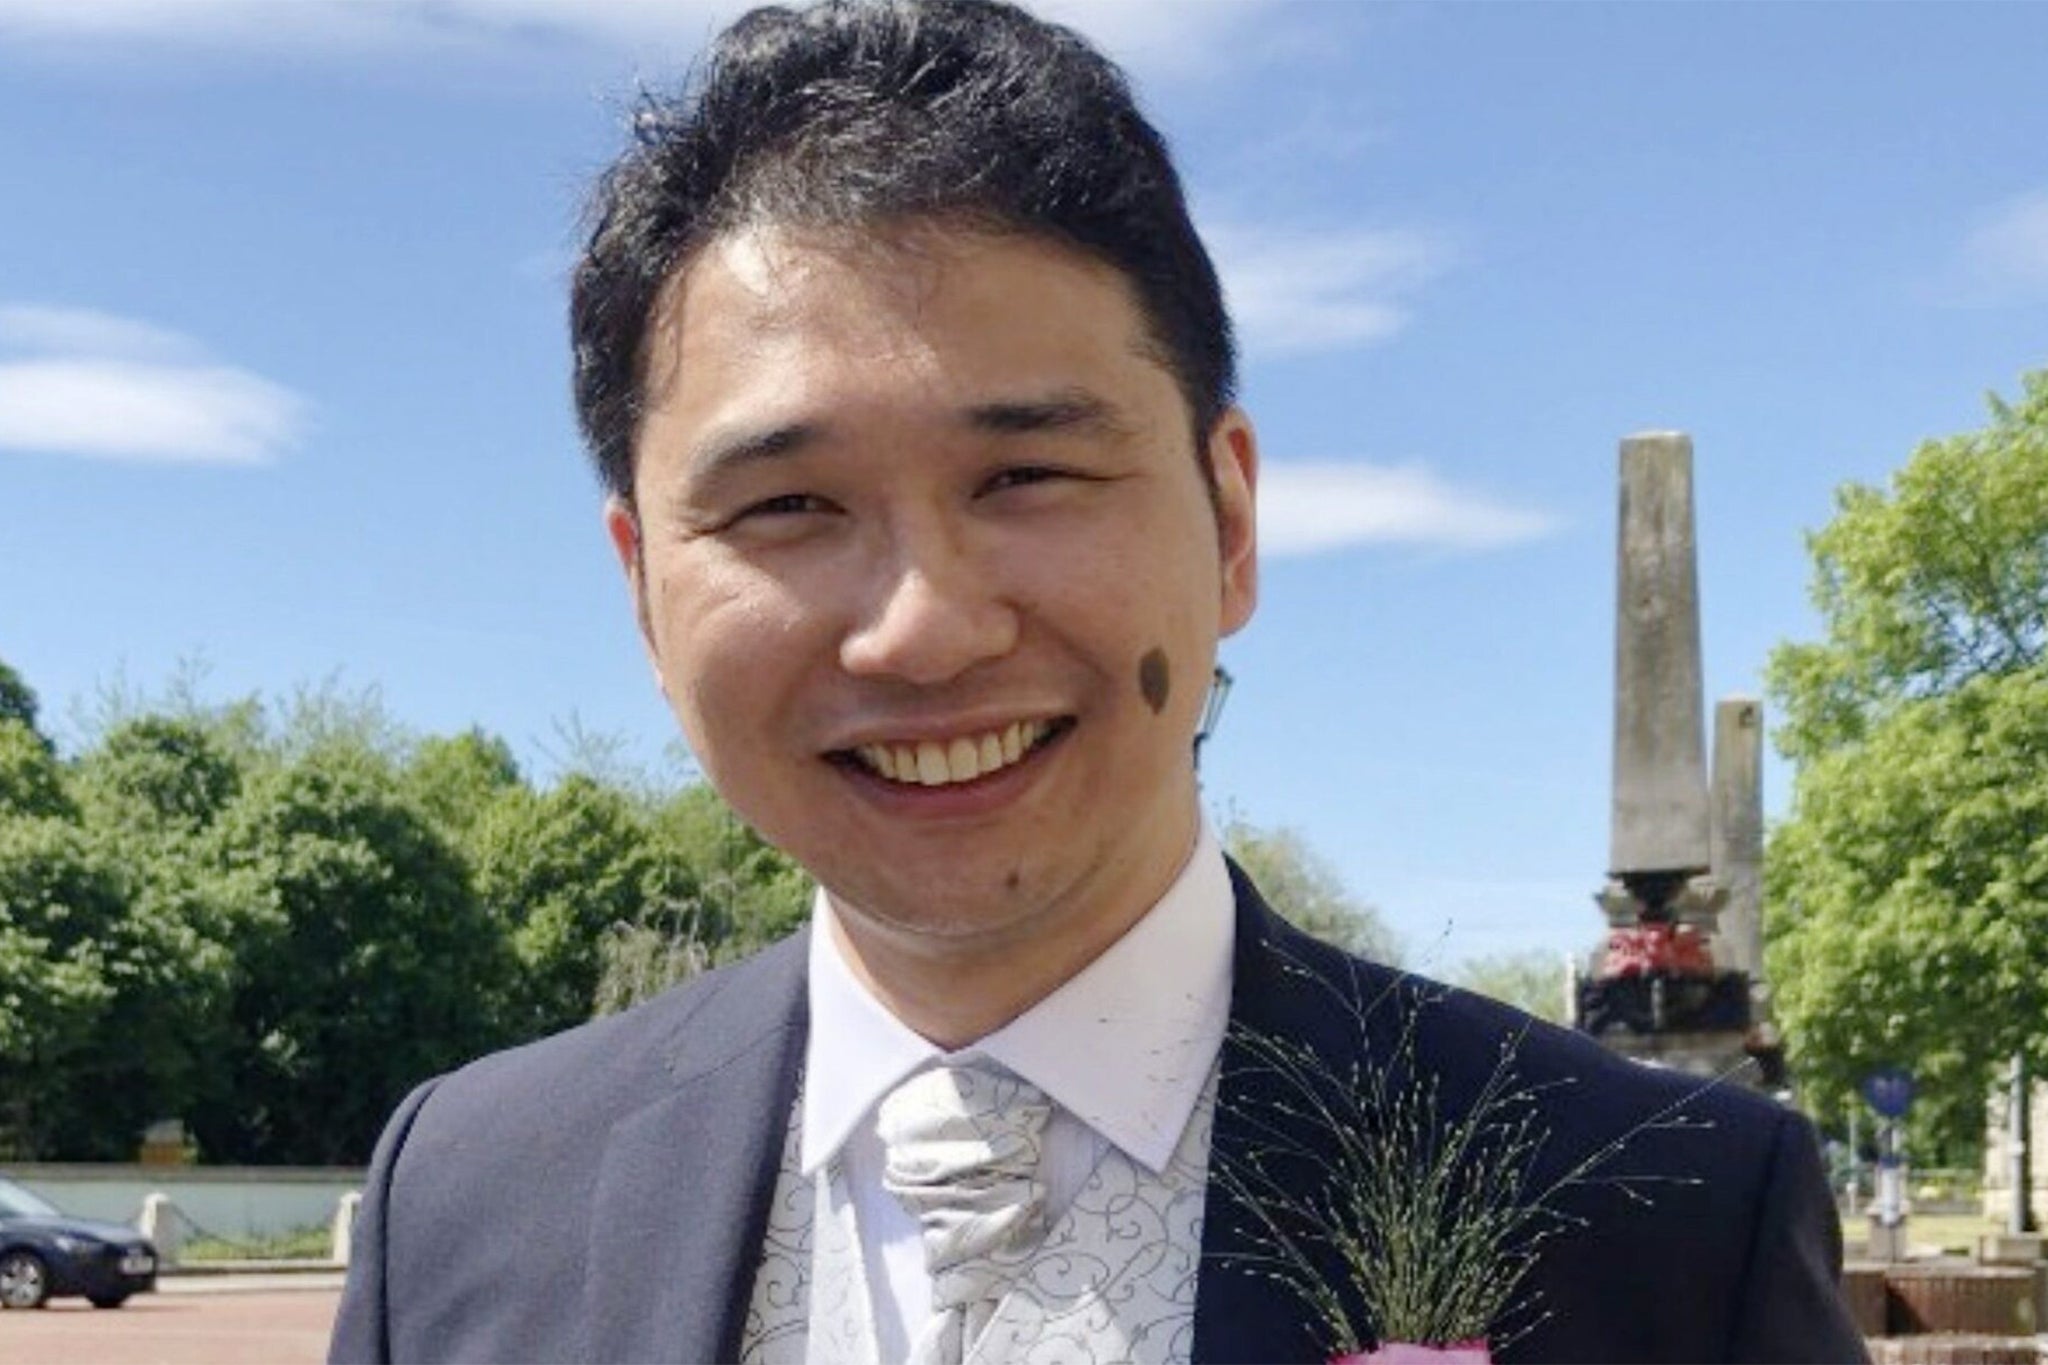 British surgeon Kar Hao Teoh was shot dead at the wheel of his hire car